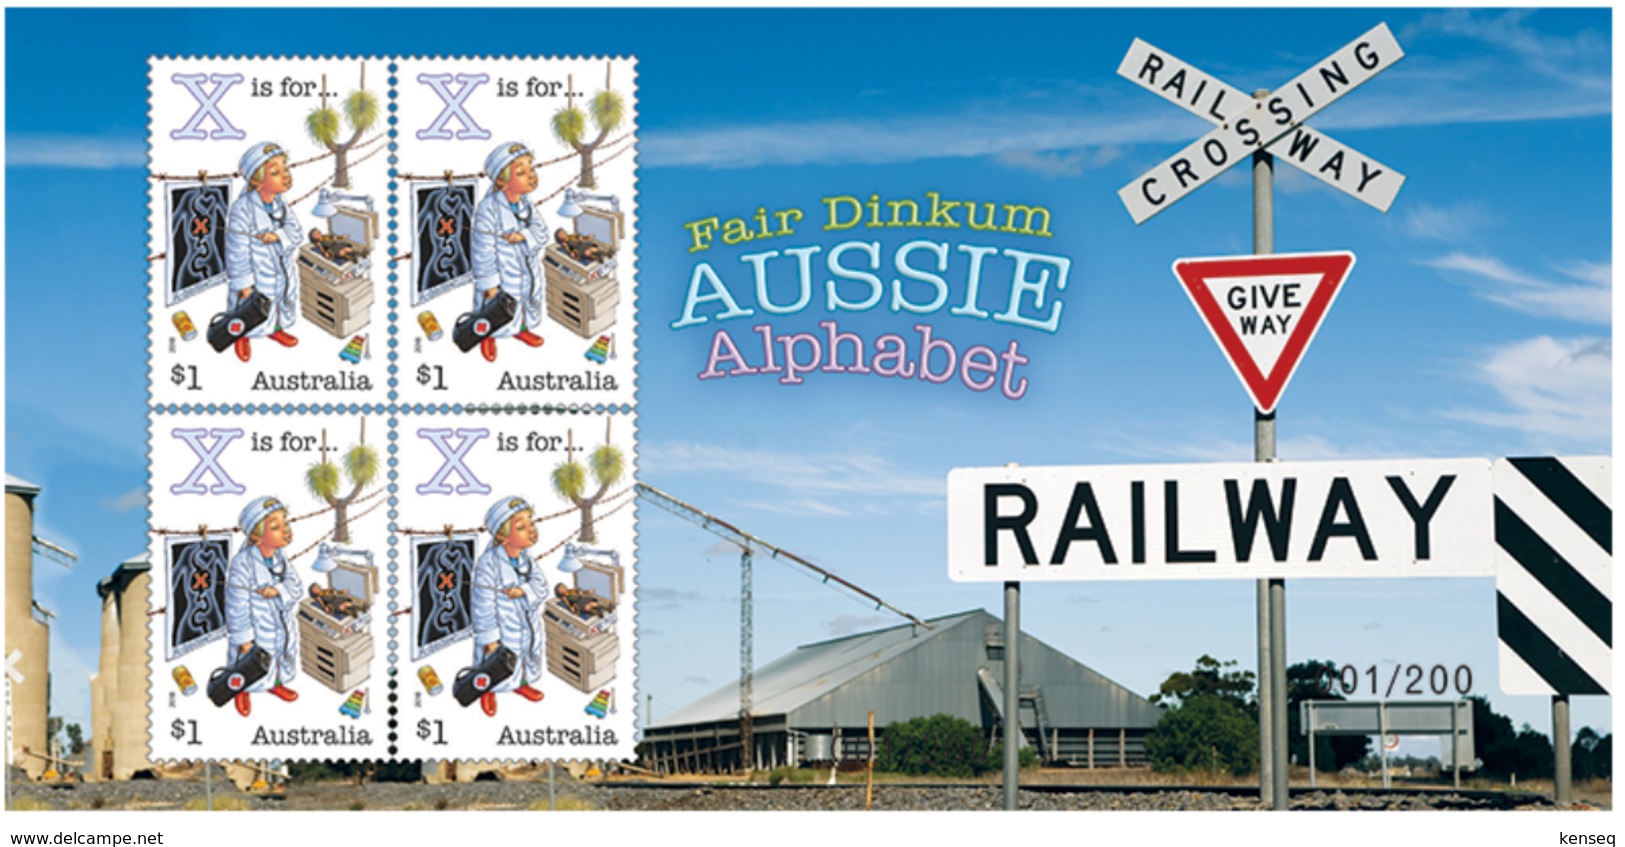 Australia 2018 - Fair Dinkum Aussie Alphabet "X" MS - Numbered 49 - Railway Crossing MNH - Mint Stamps